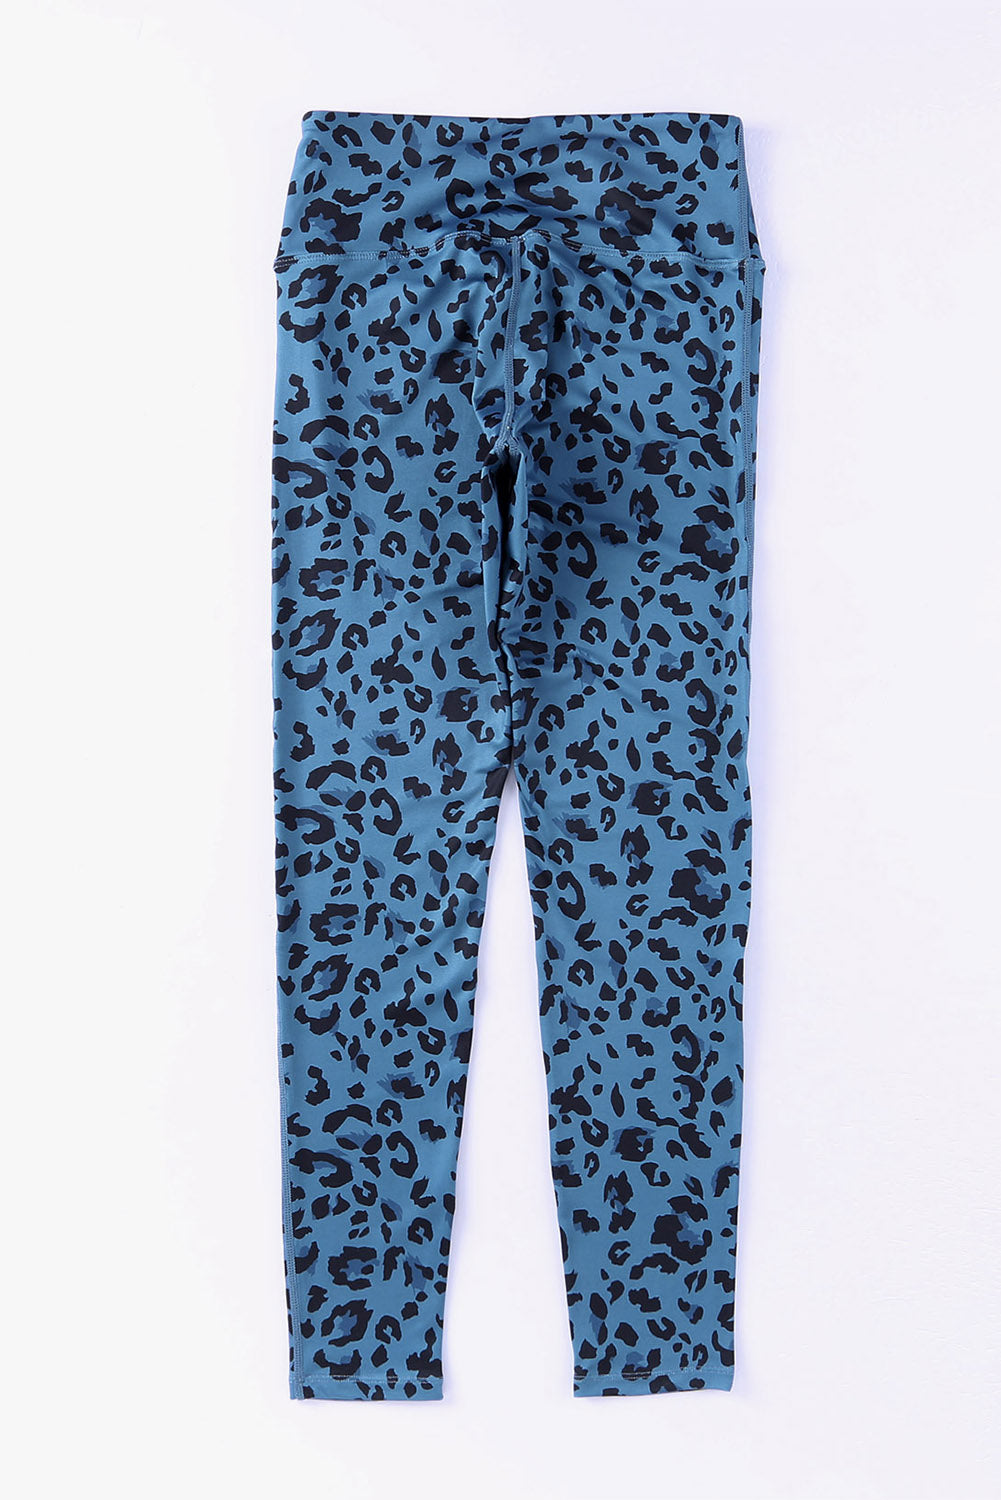 Blue Classic Leopard Print Active Leggings